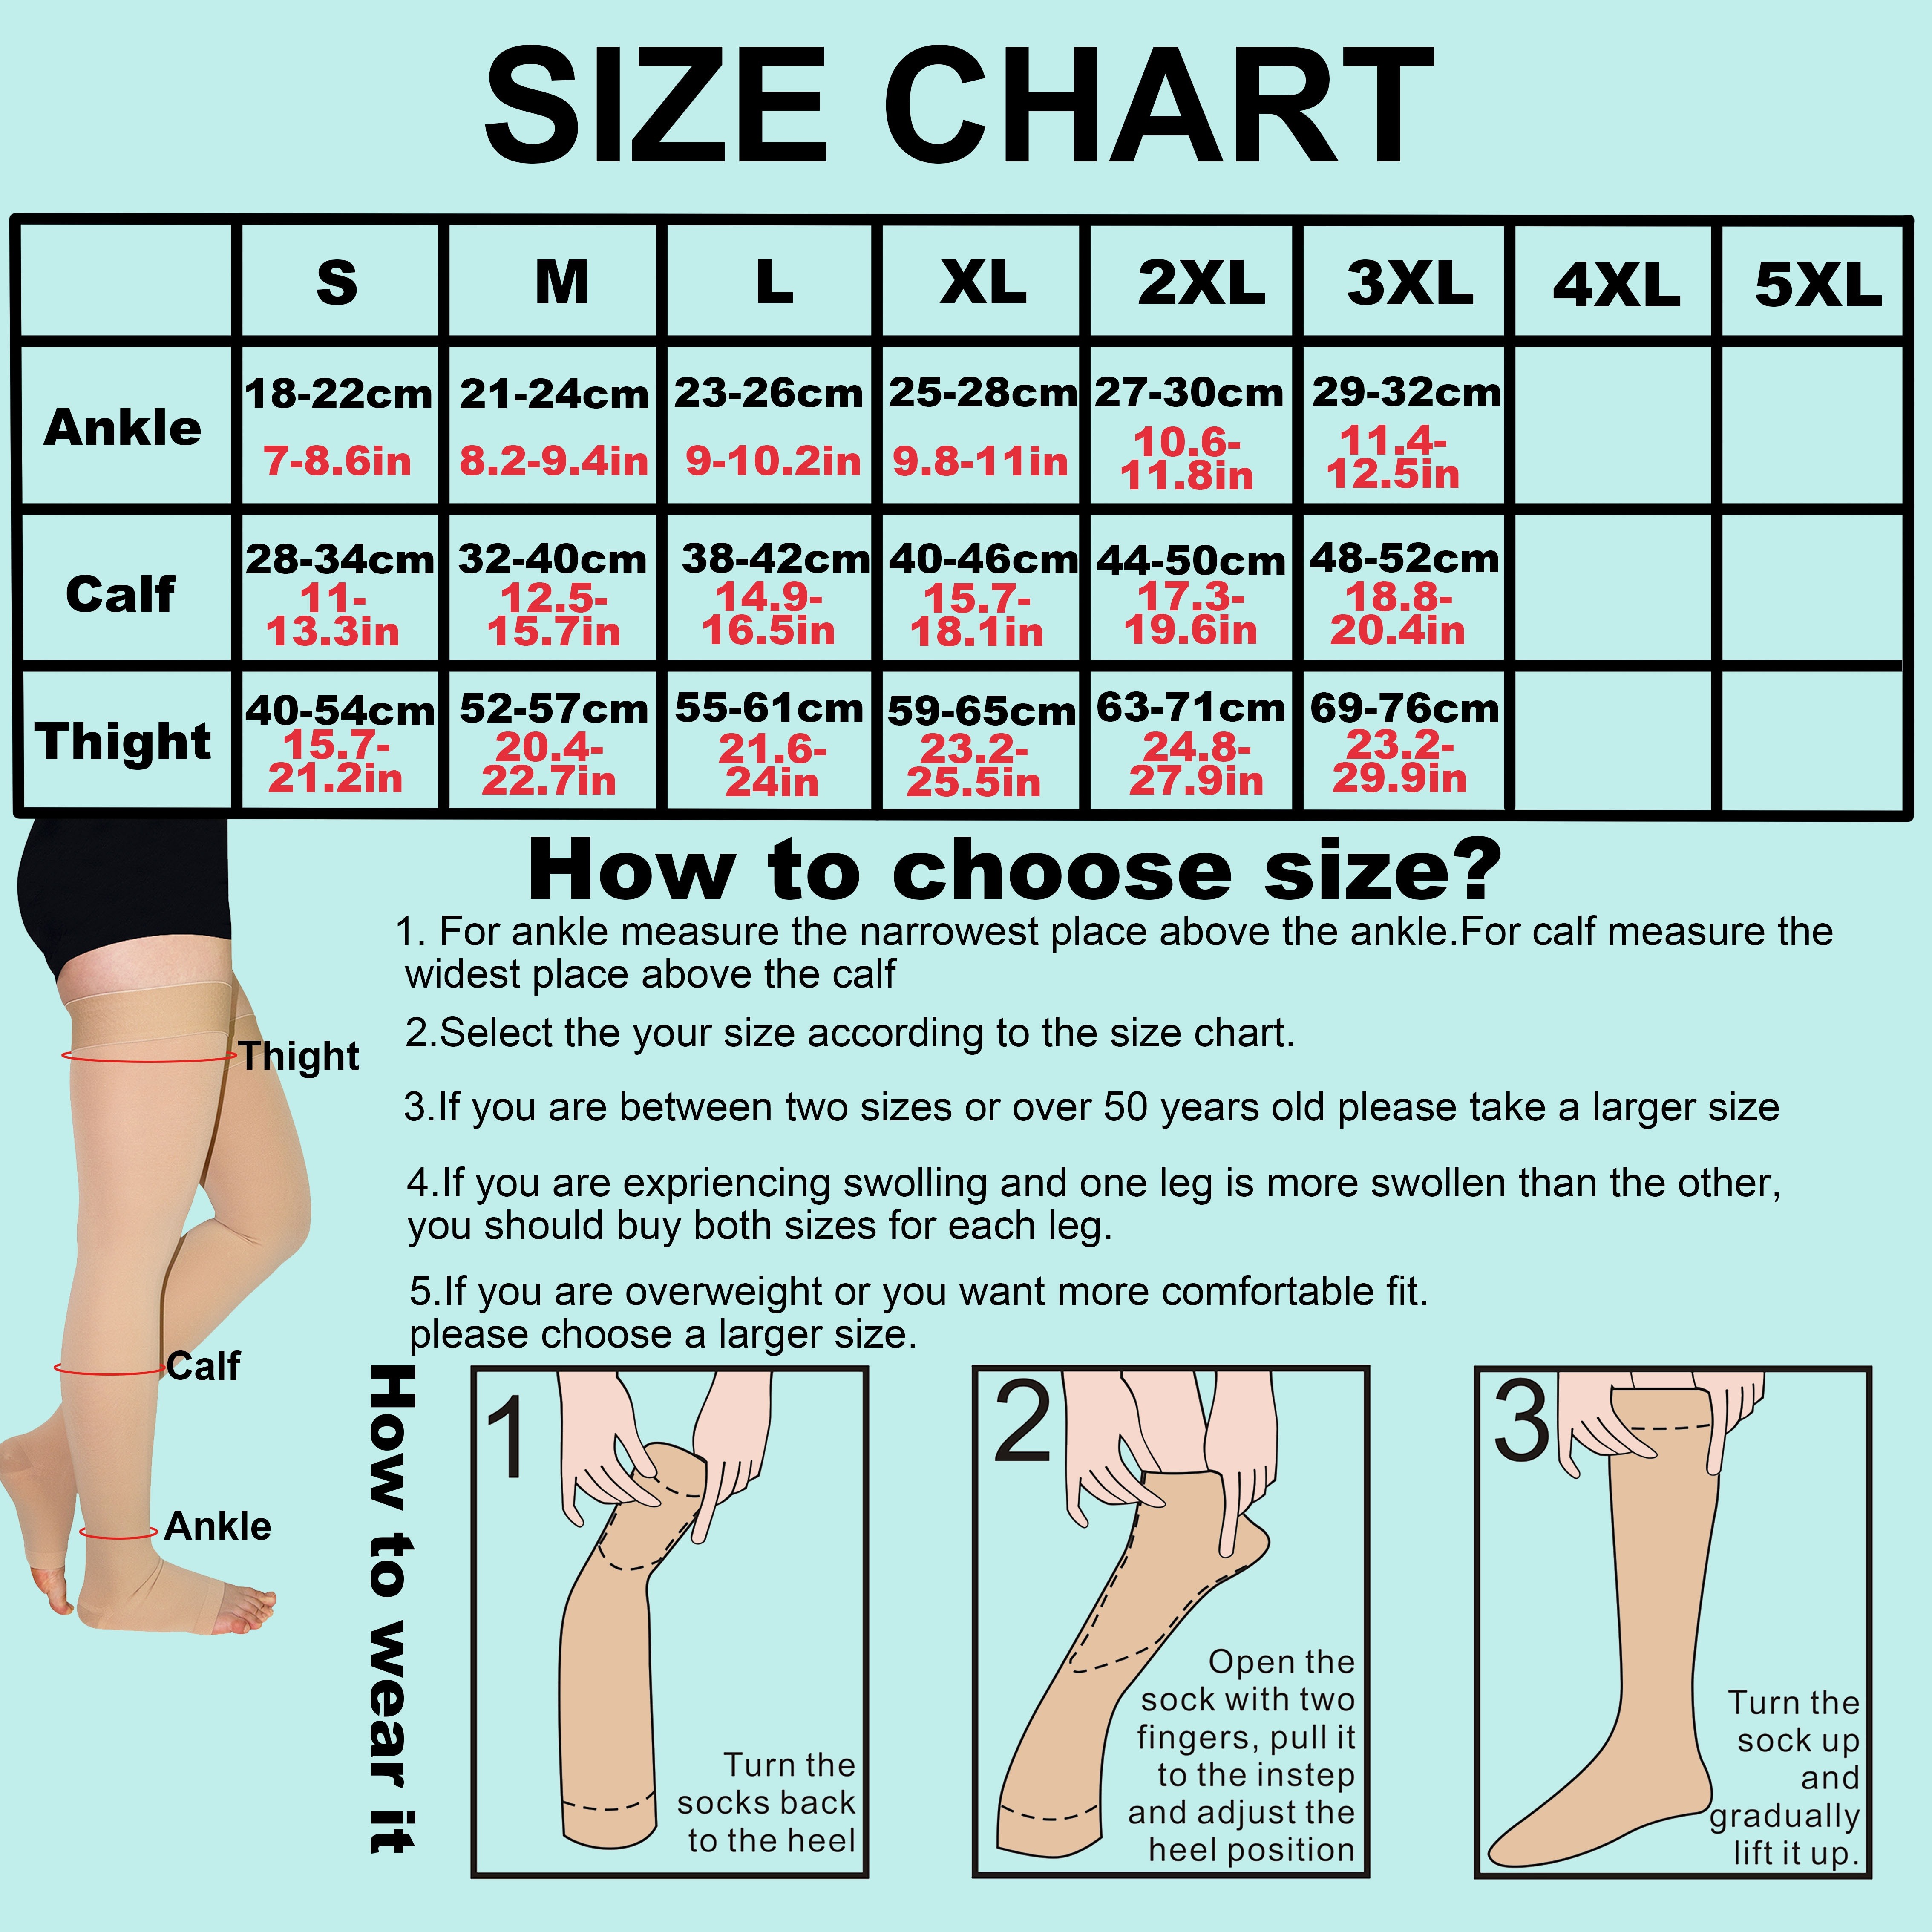 Thigh High Compression Stockings 20-30 mmHg Support Socks Varicose Veins  Edema 